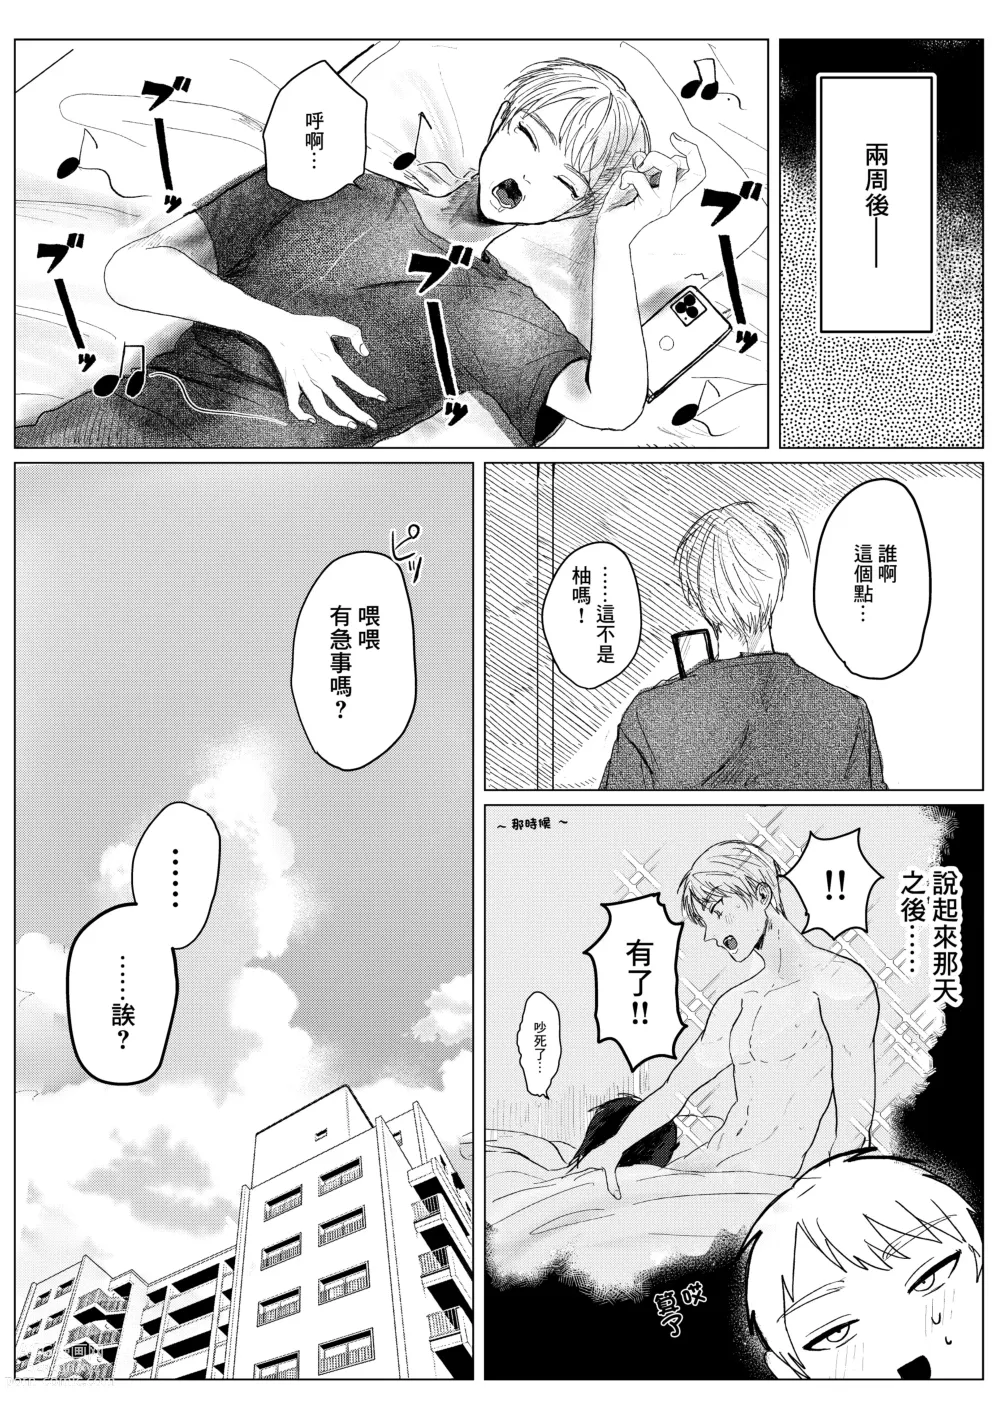 Page 24 of doujinshi Shingata!? TS Virus